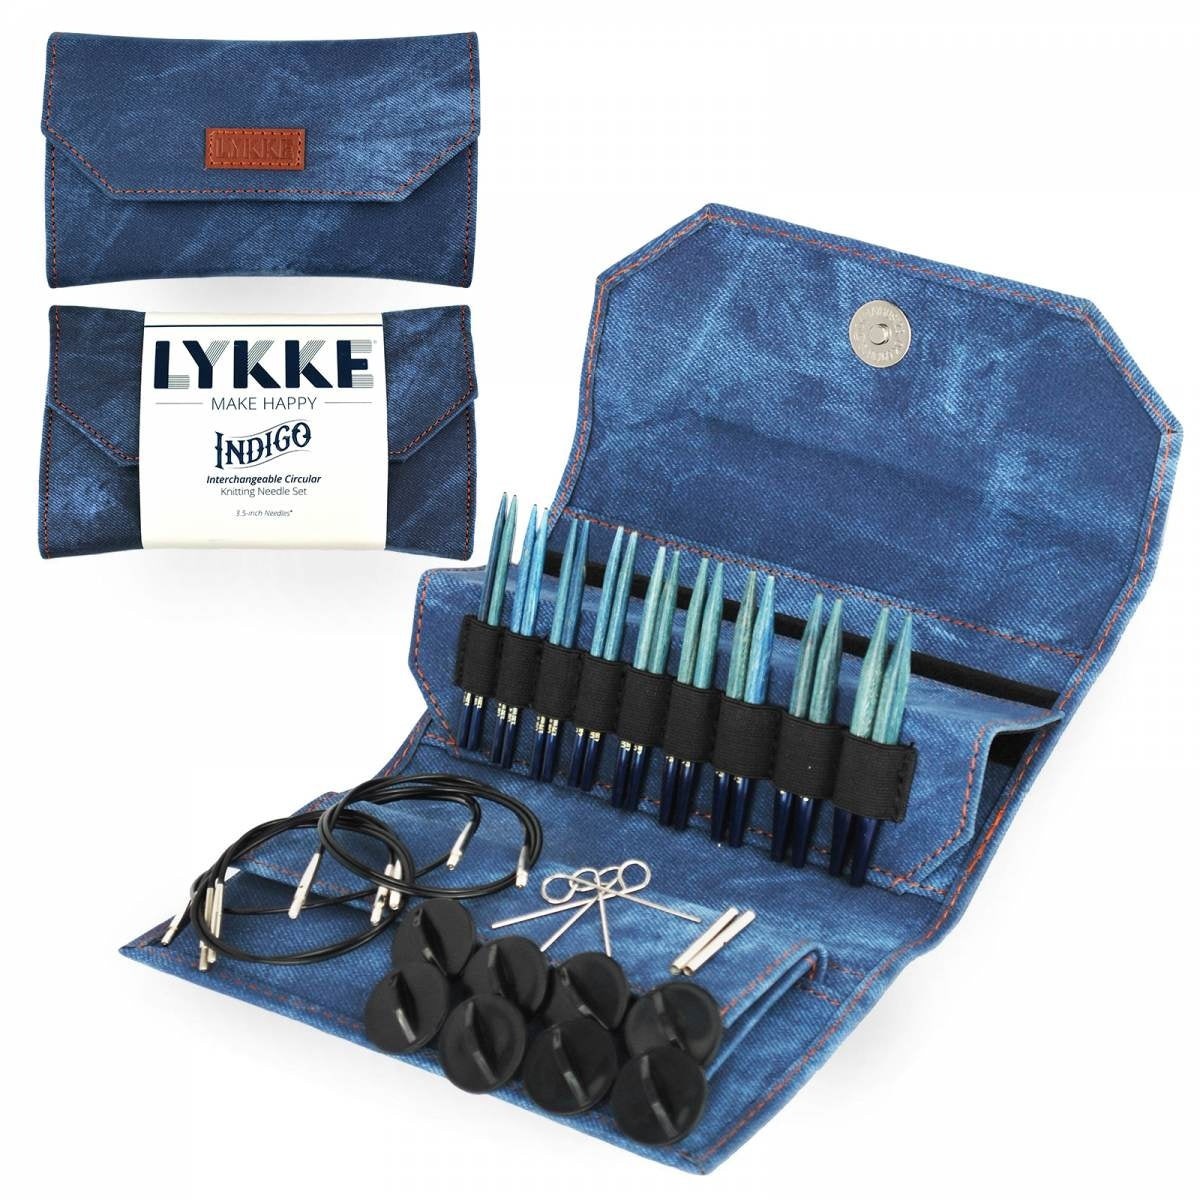 LYKKE 3.5" Interchangeable Circular Knitting Needle Set Indigo